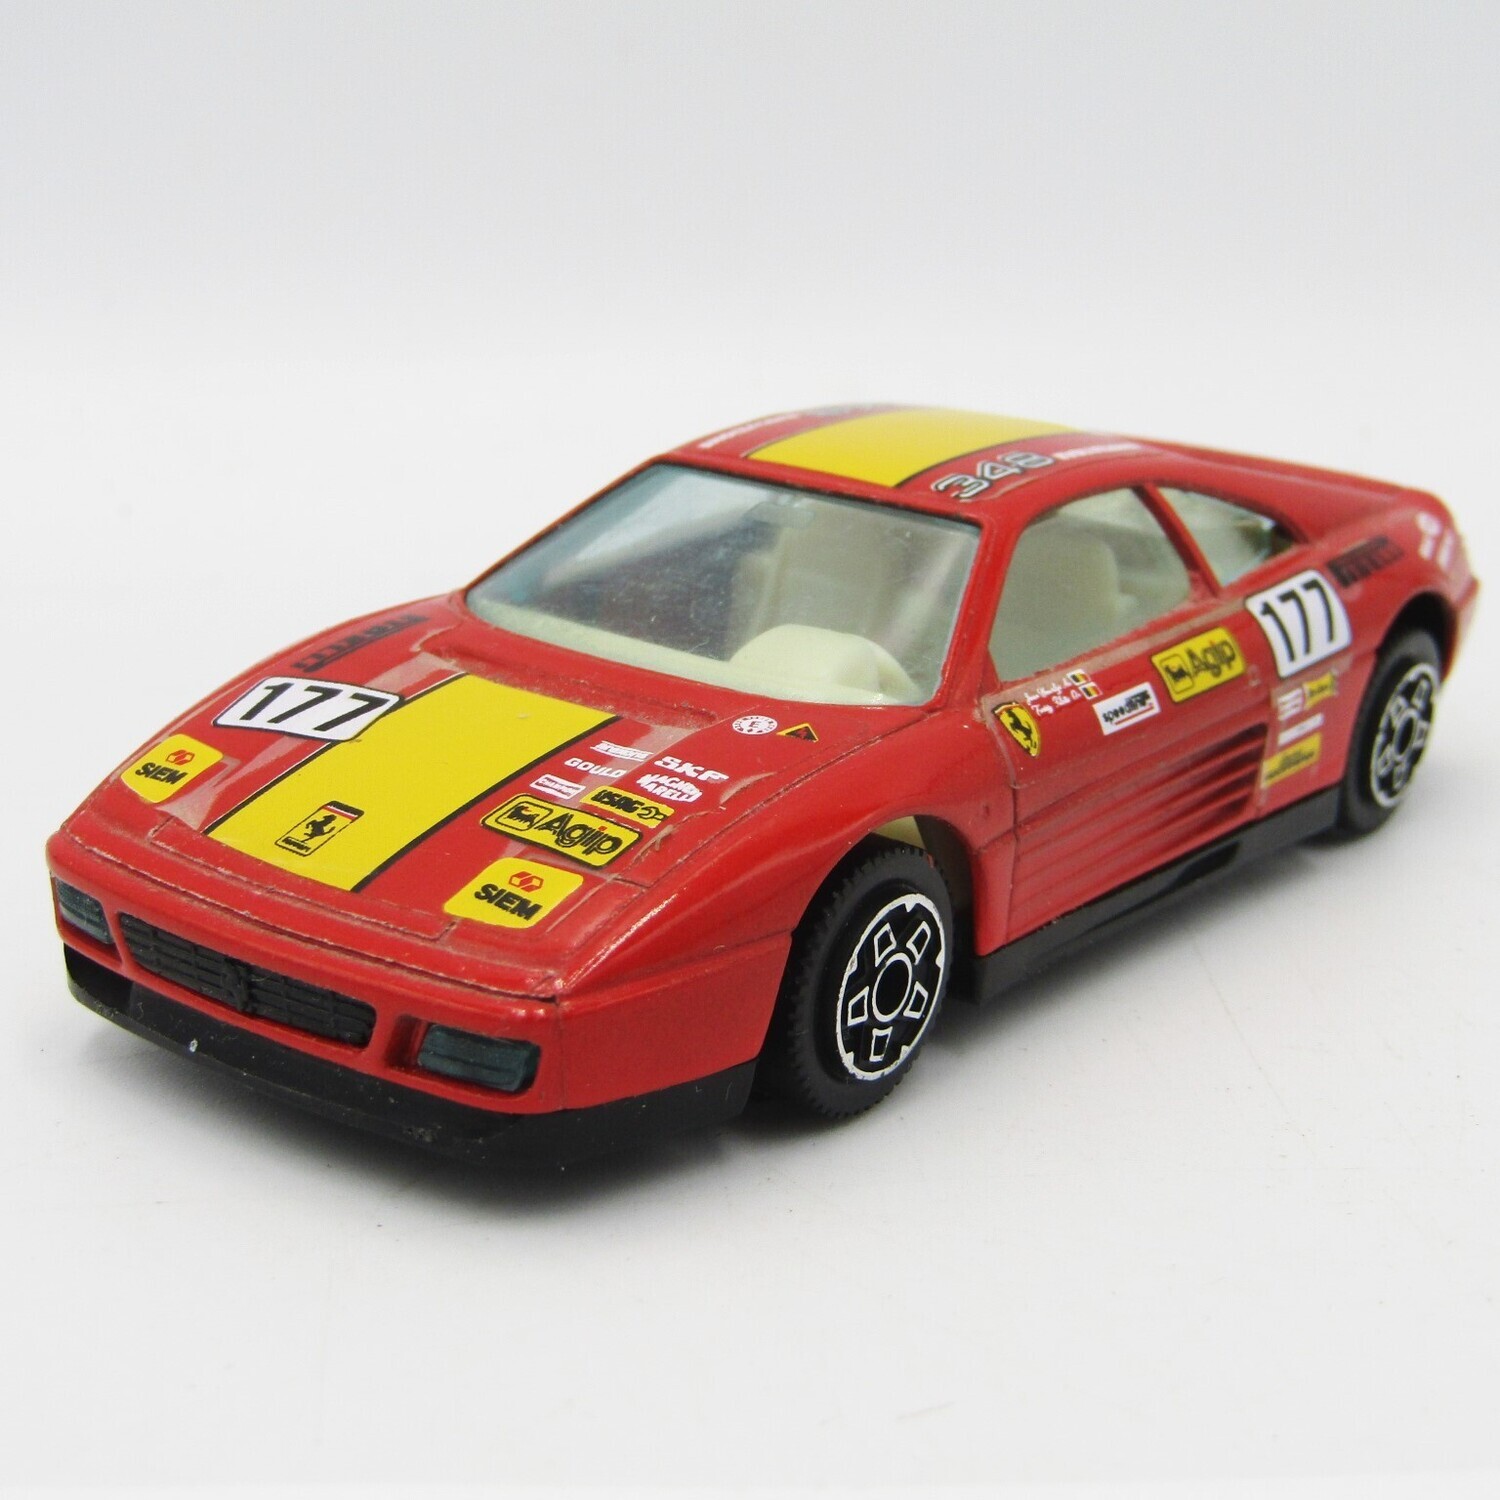 Bburago Ferrari 348 tb die-cast racing model car - scale 1/43